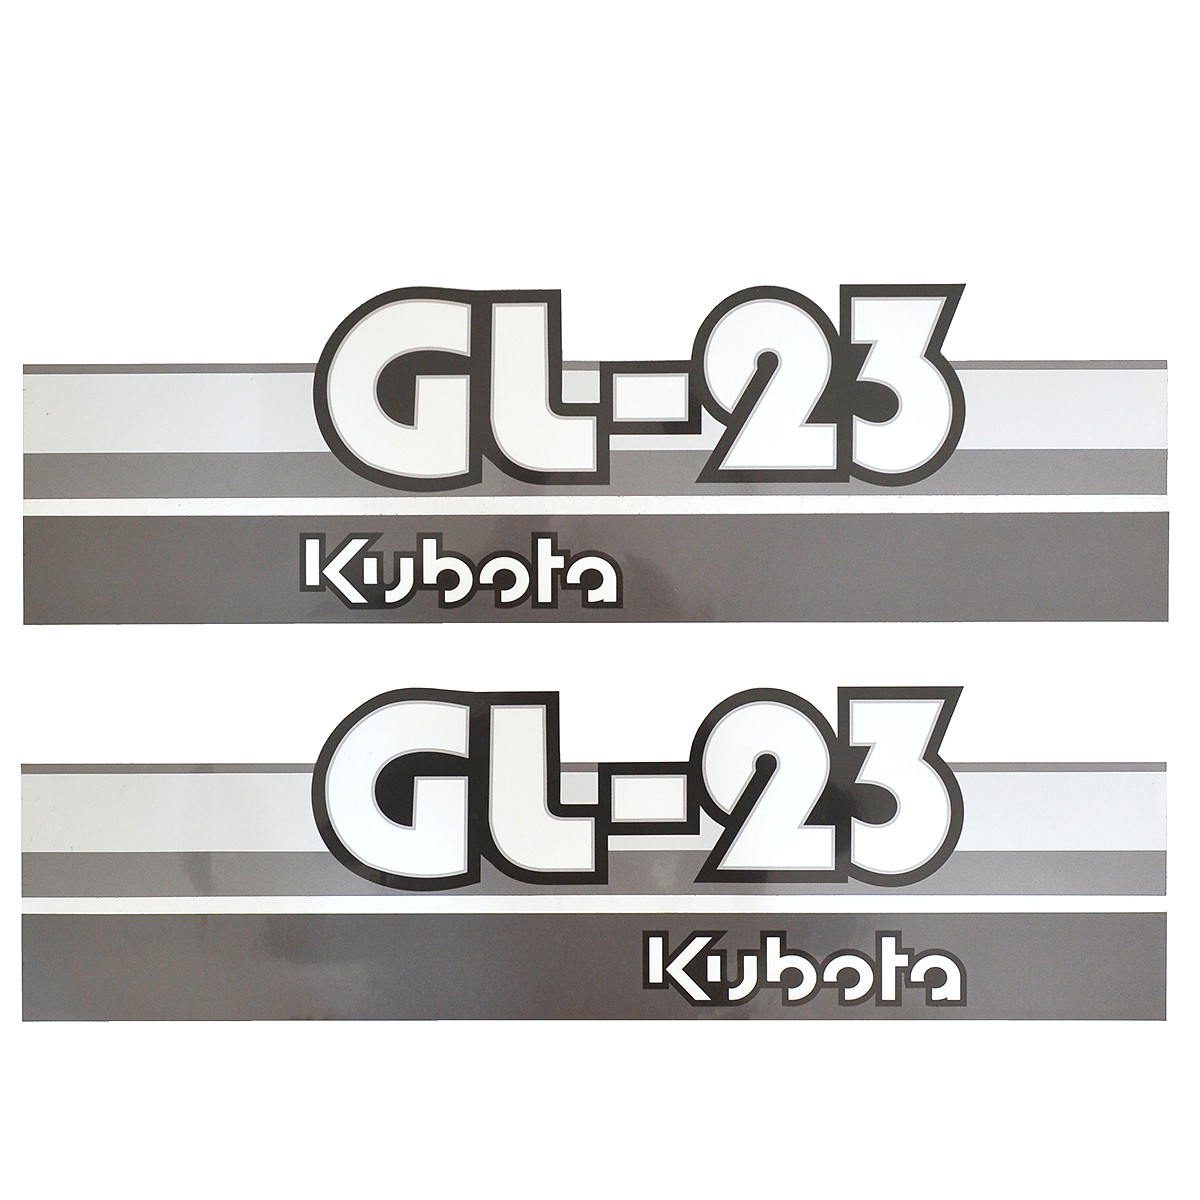 Autocollants Kubota GL23